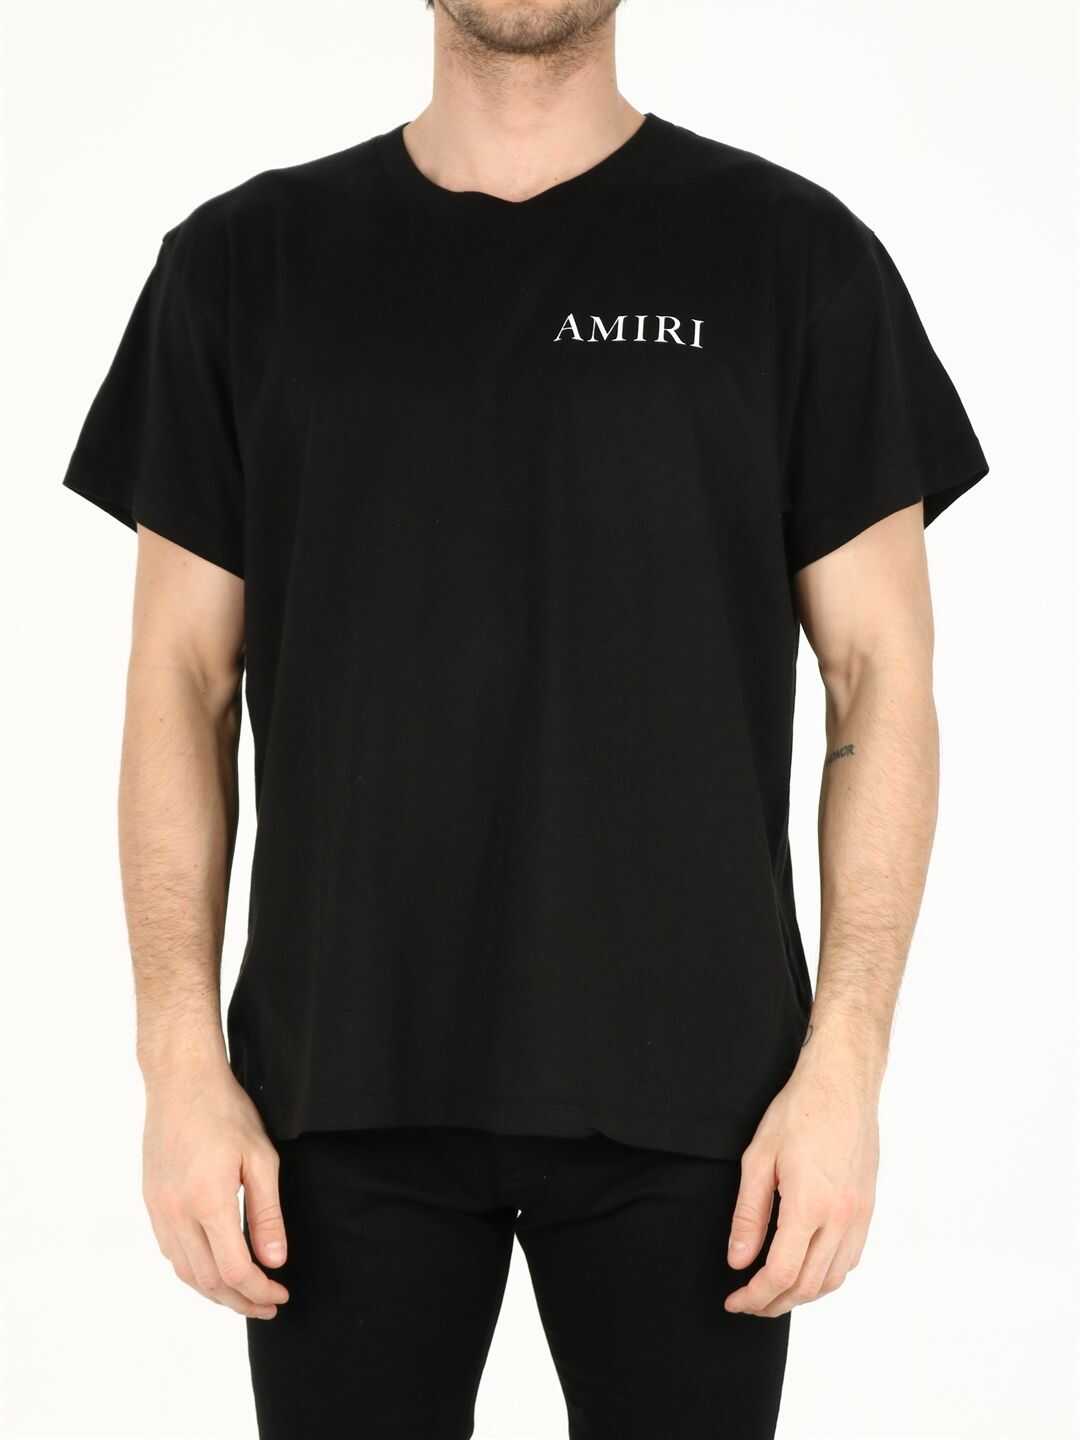 AMIRI Printed T-Shirt MJGT002 Black